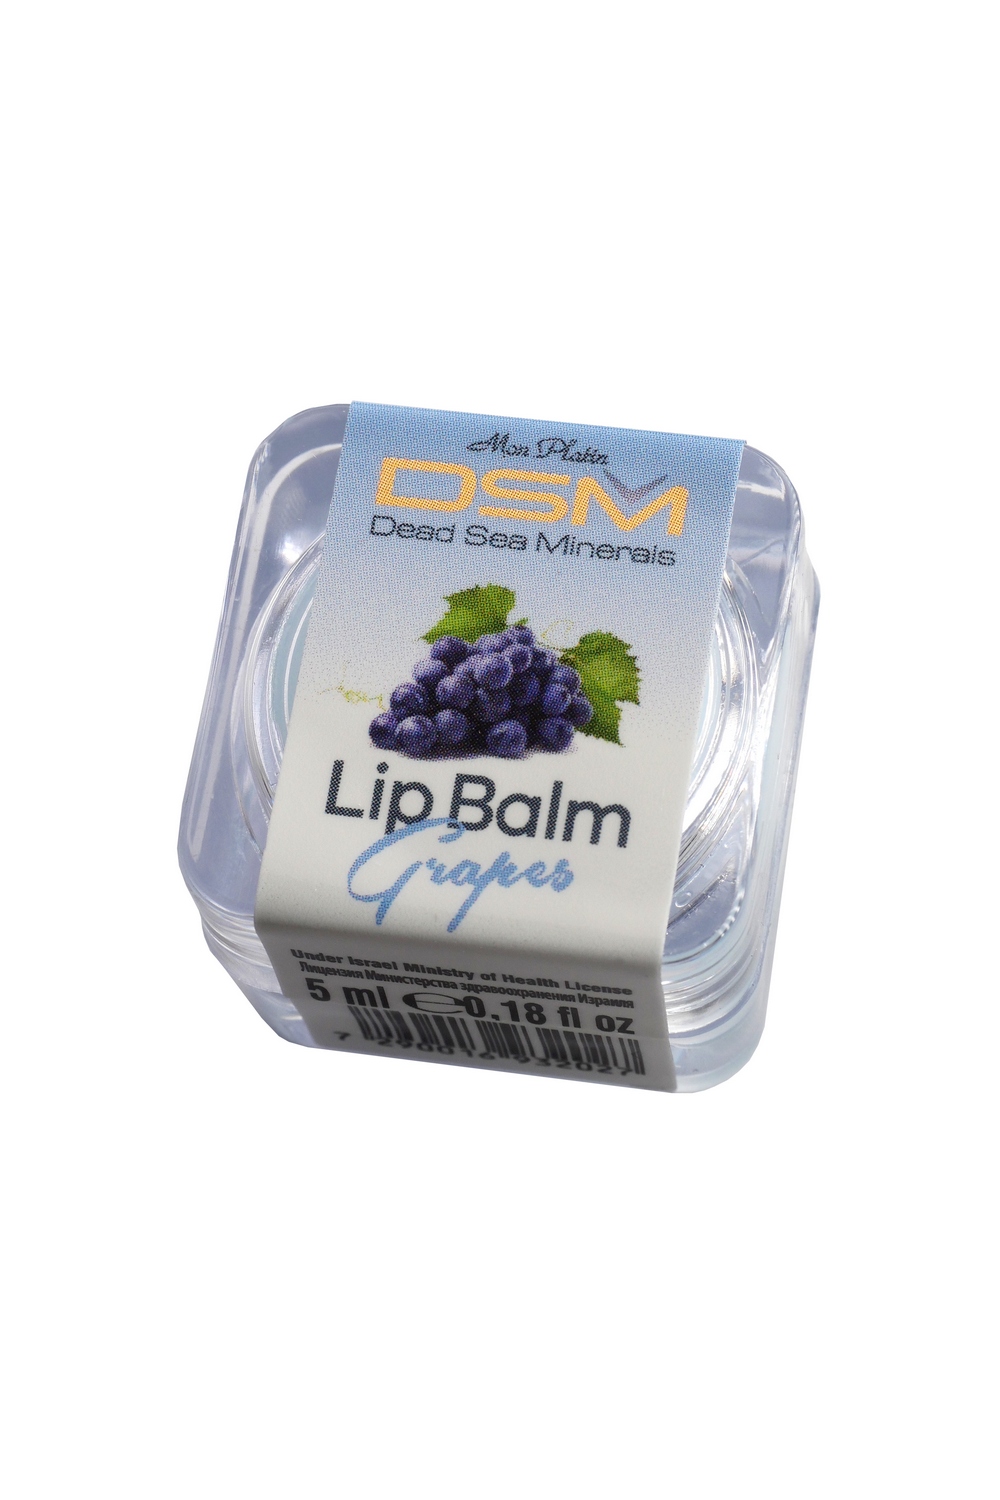 Lip Balm Grape based on Coconut & Shea butter